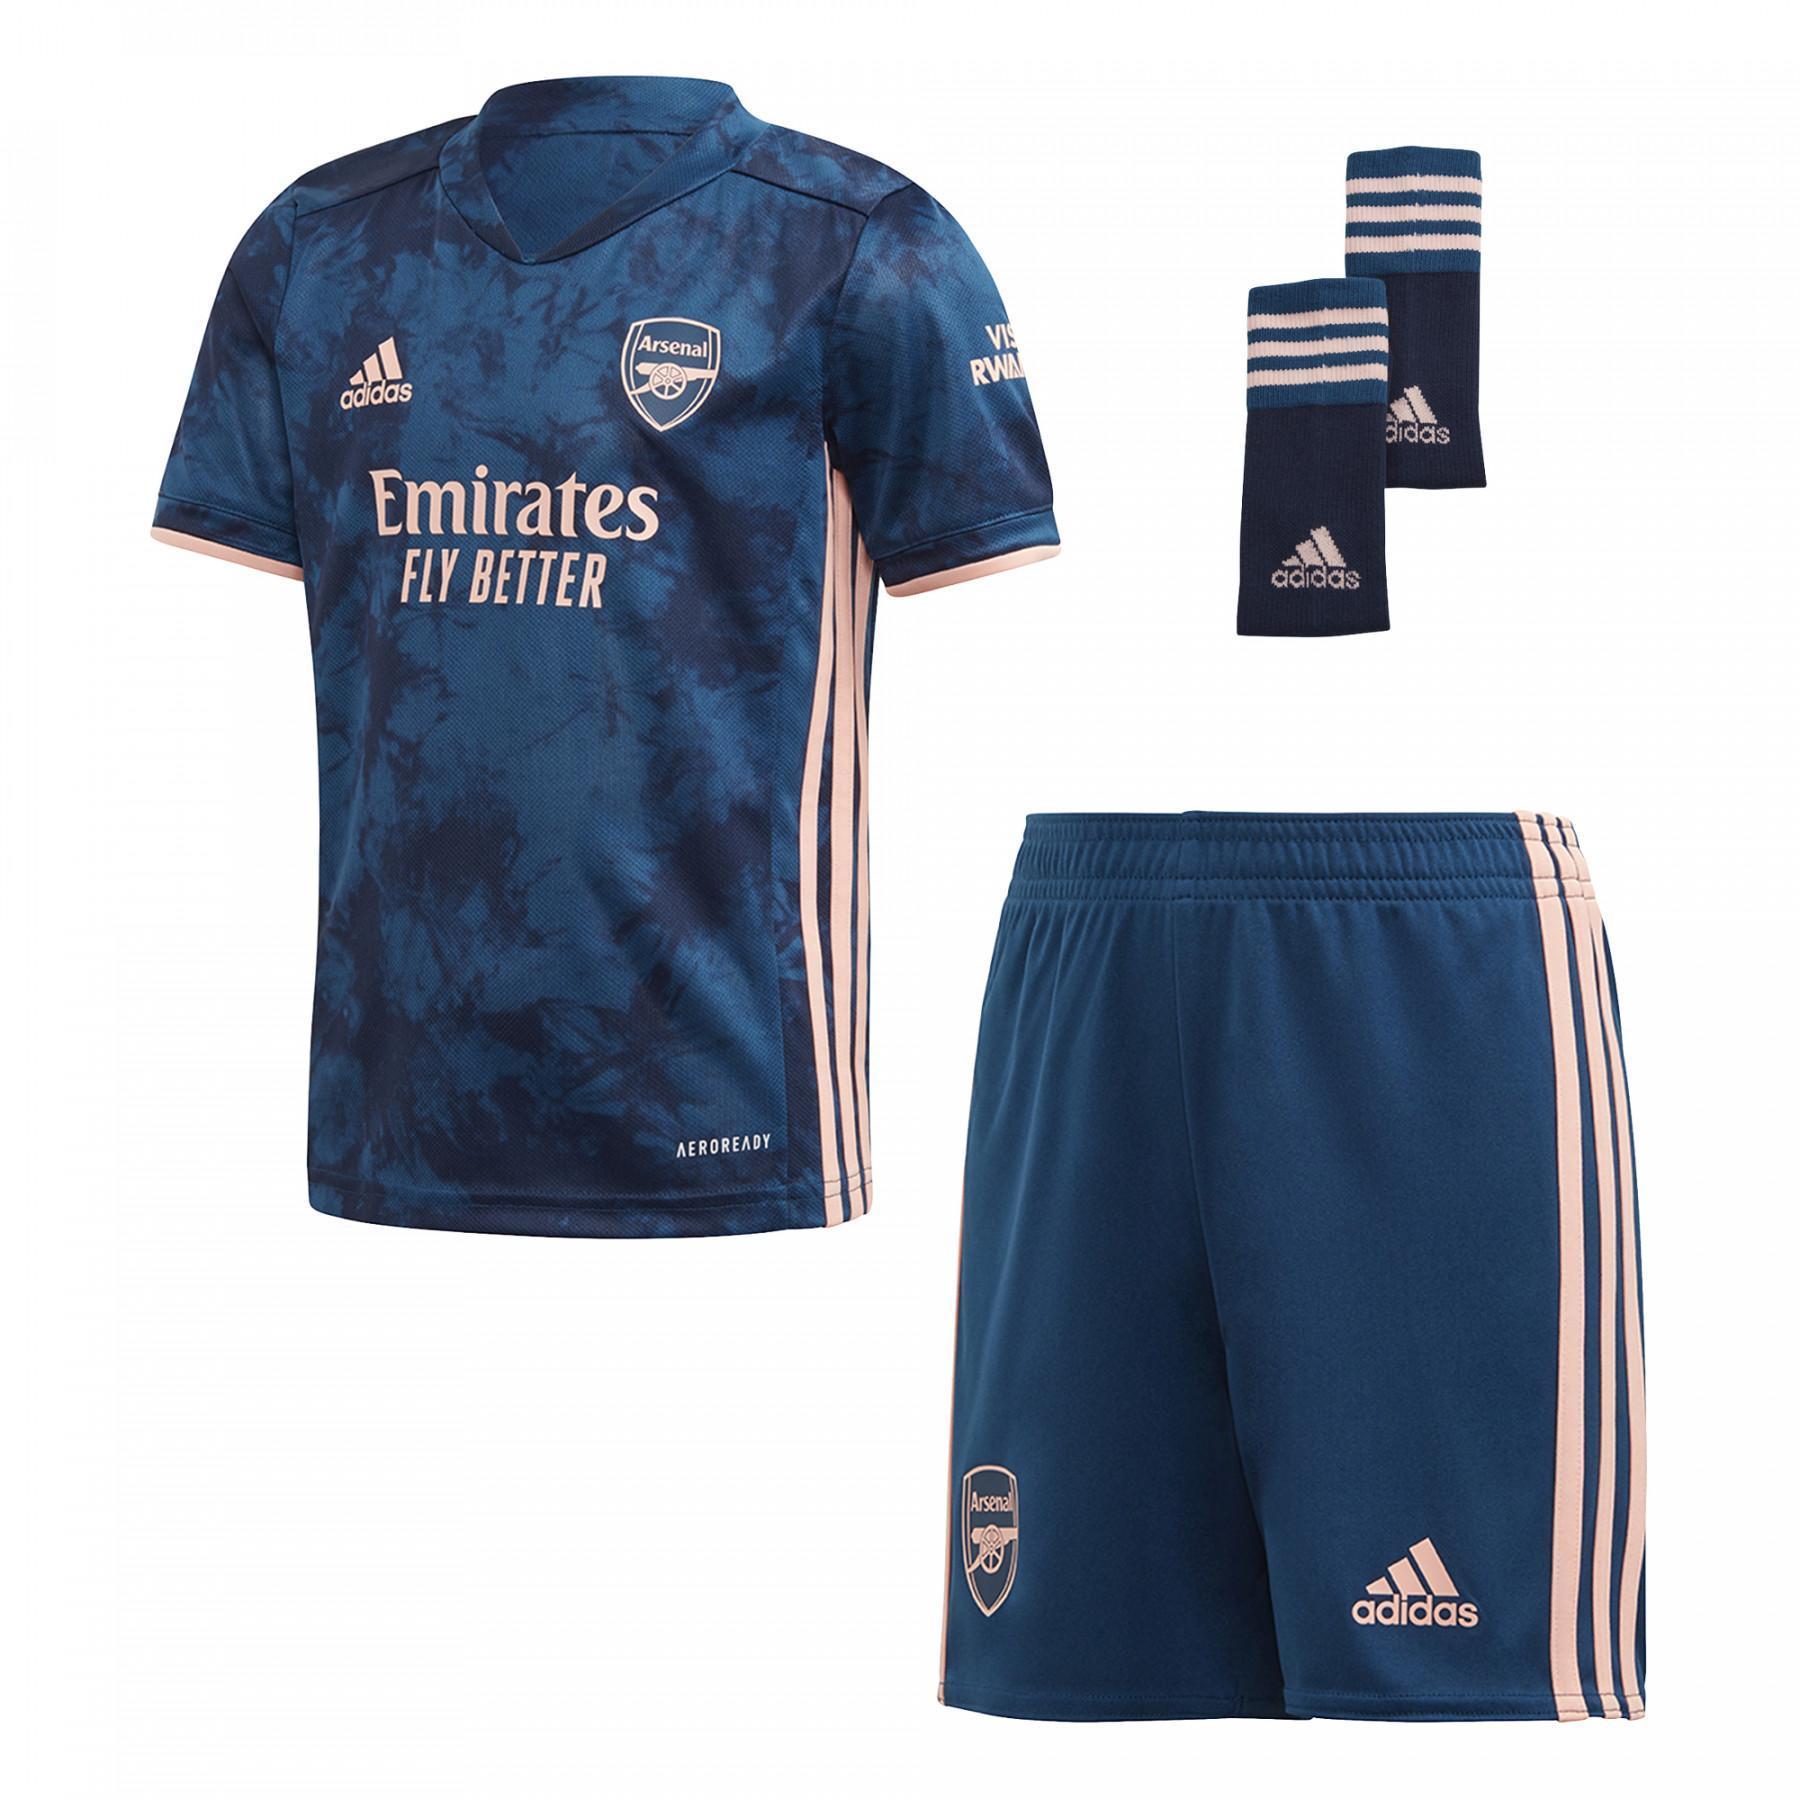 Mini-kit criança terceiro Arsenal FC 2020/21